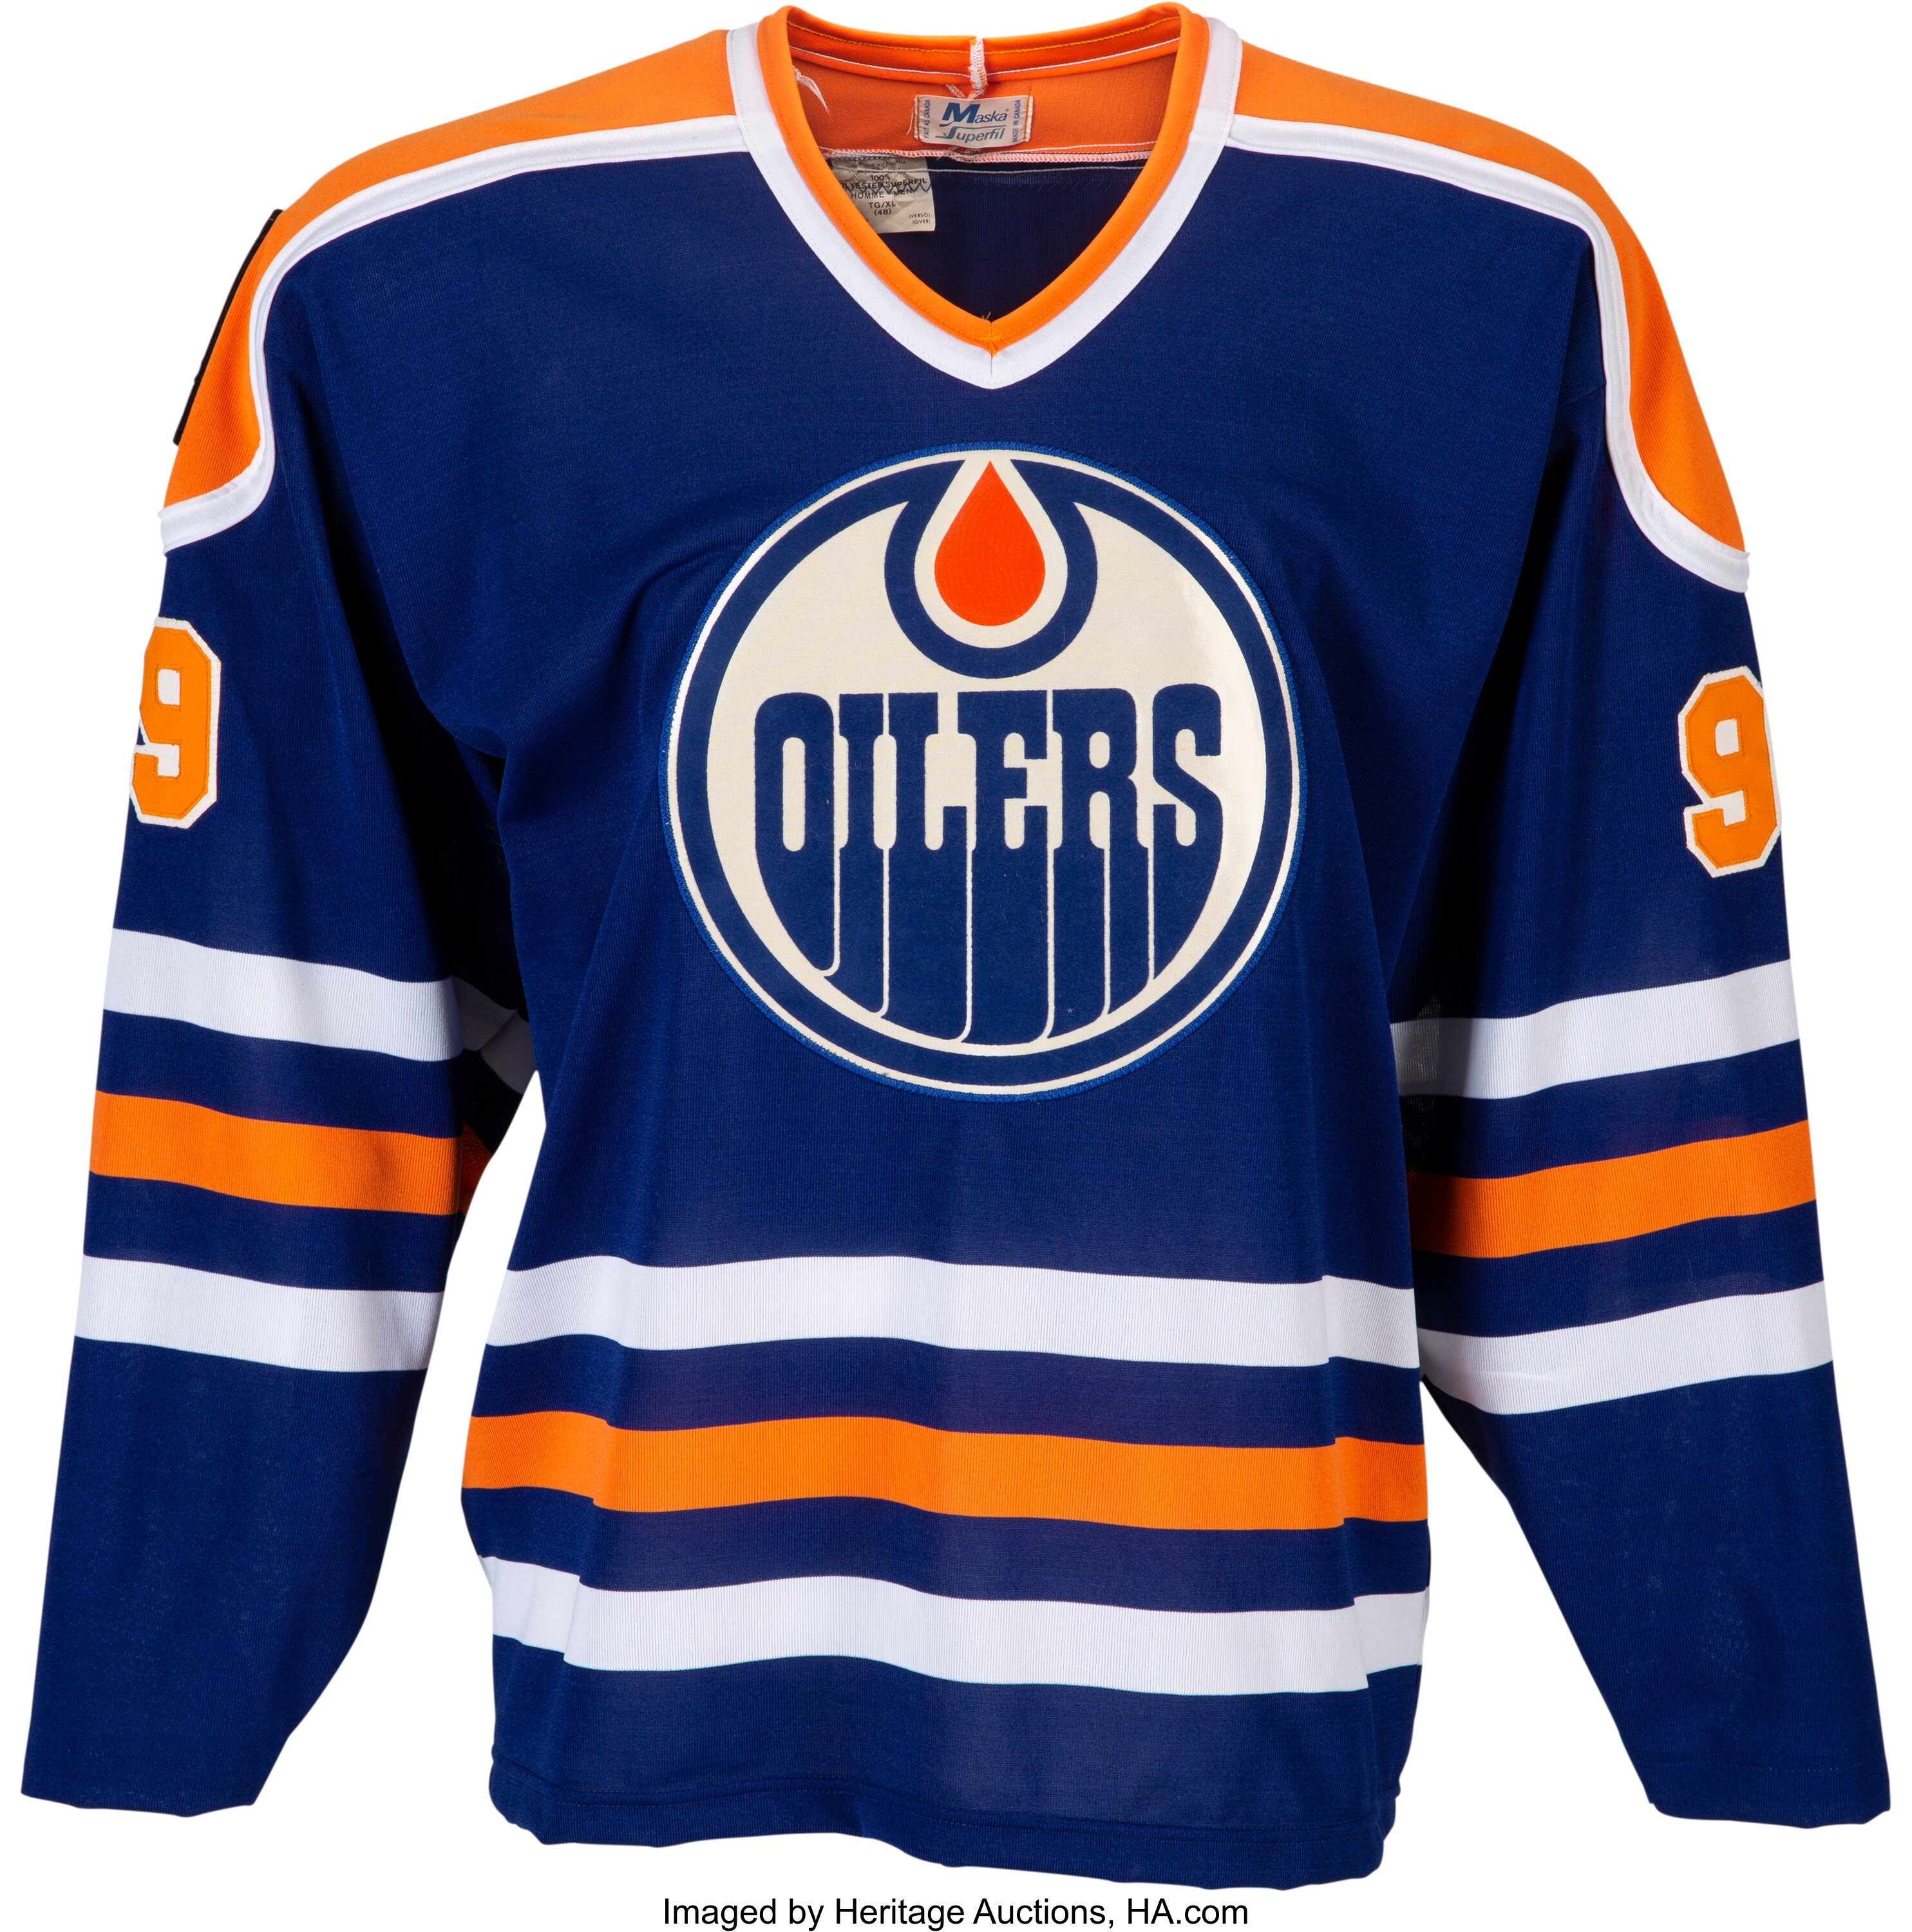 Wayne Gretzky - Edmonton Oilers Center